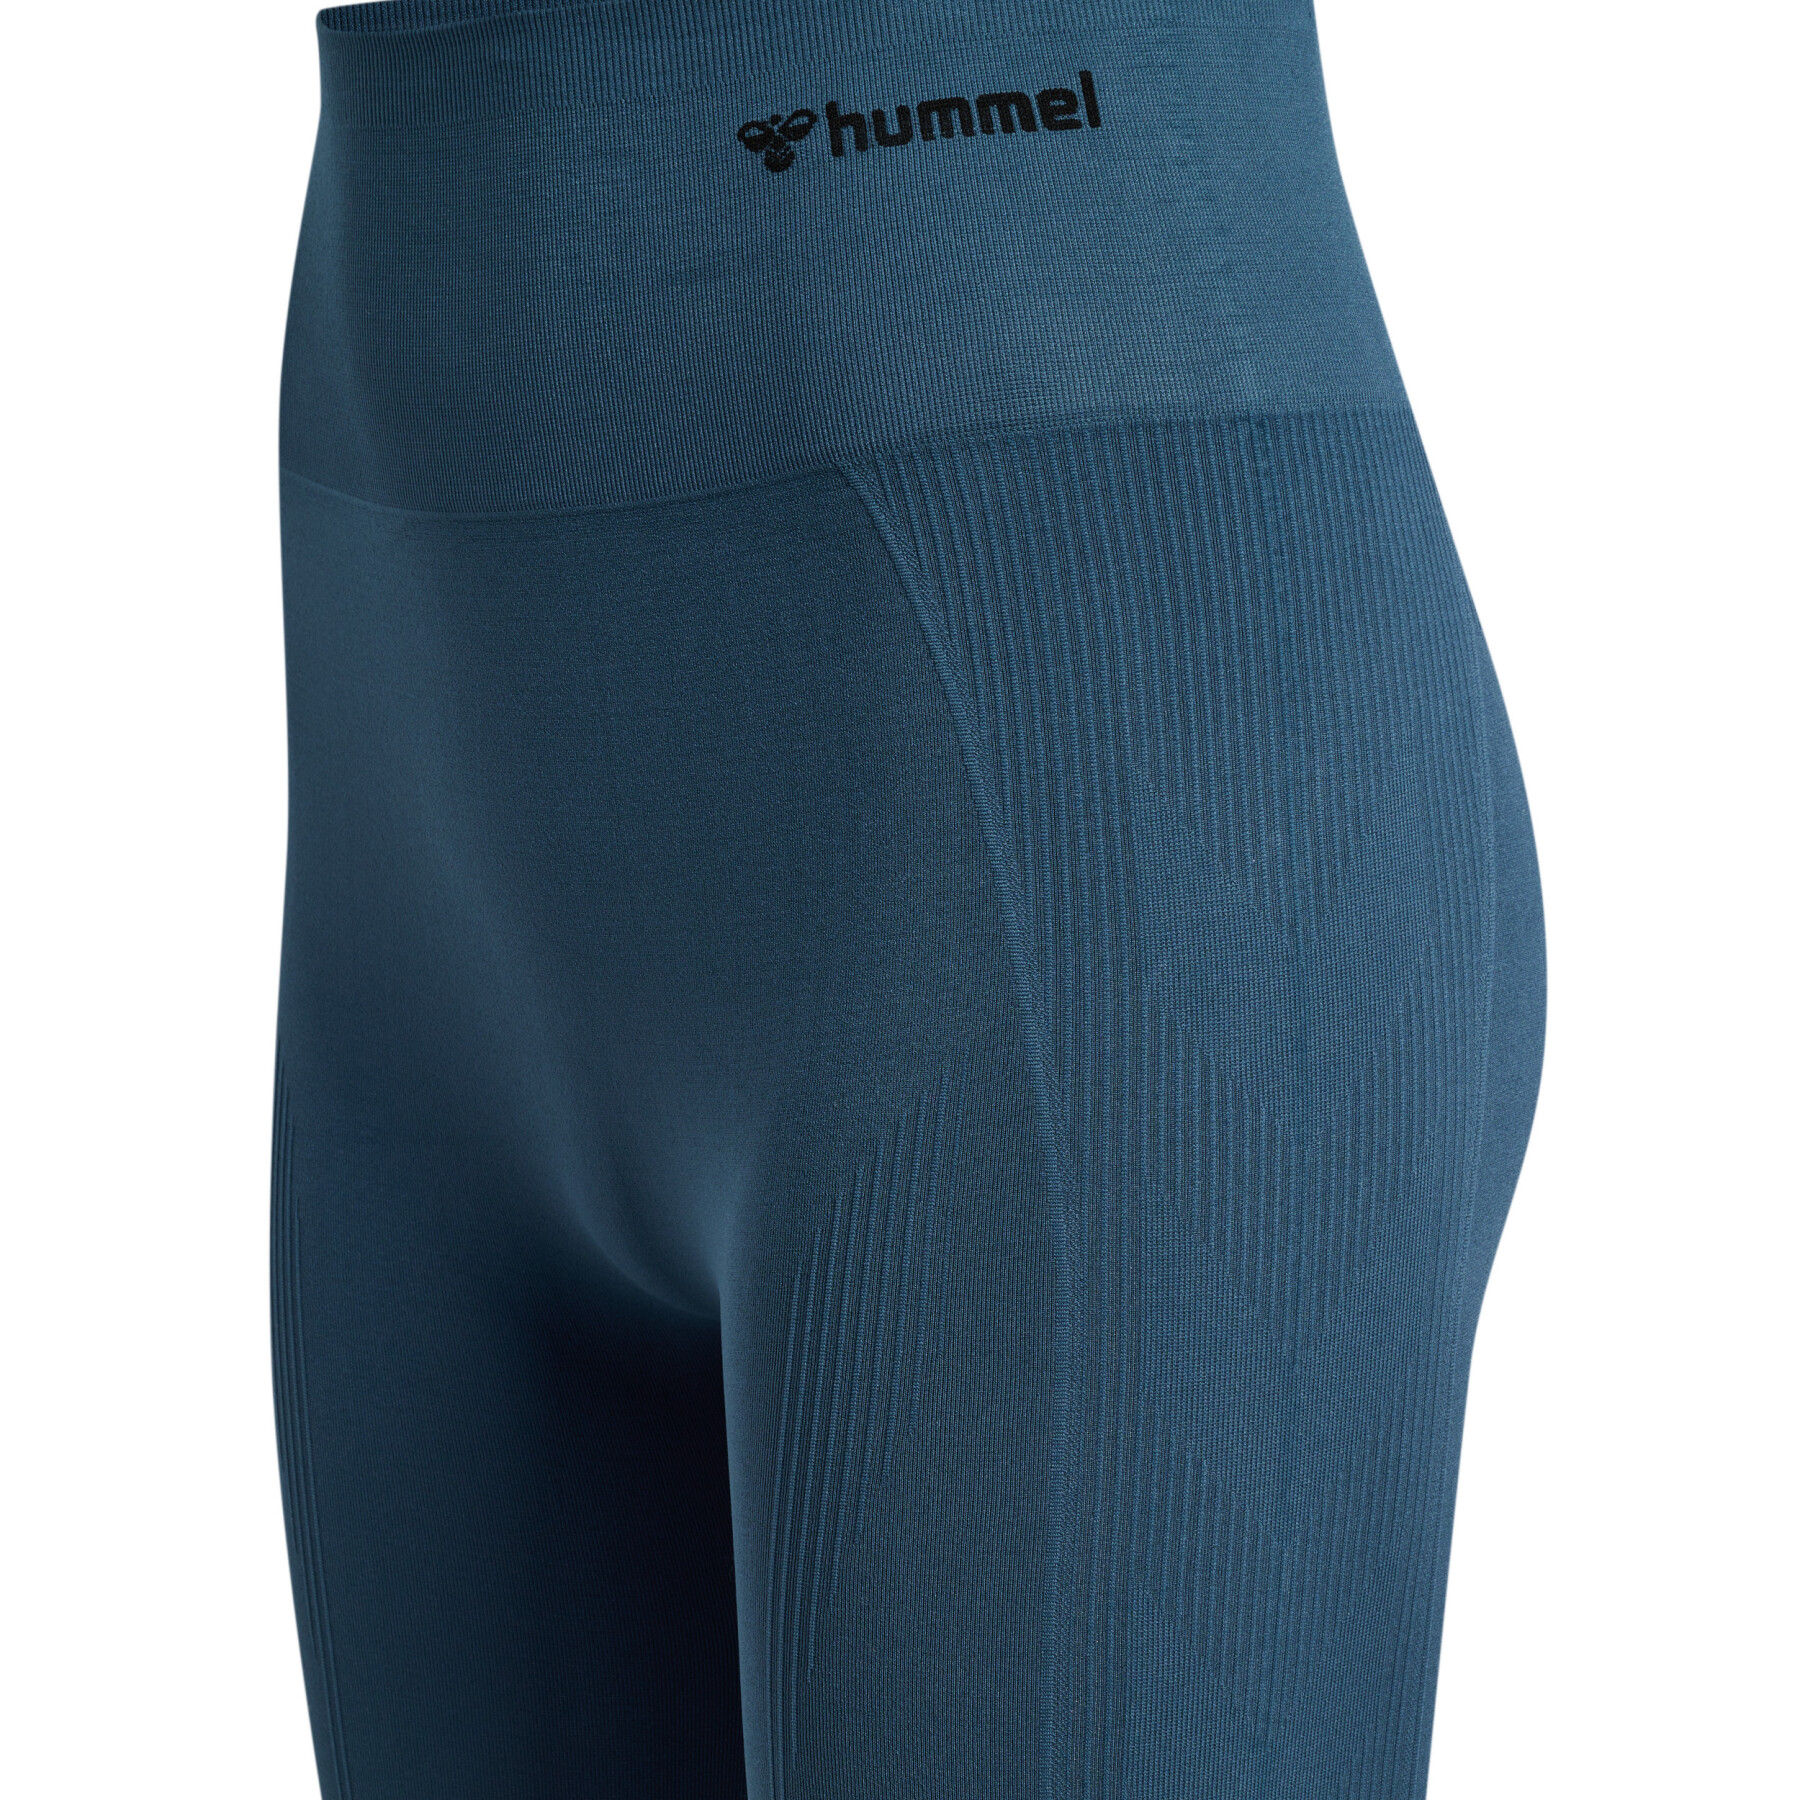 Leggings de cintura alta para mujer Hummel Tif Seamless